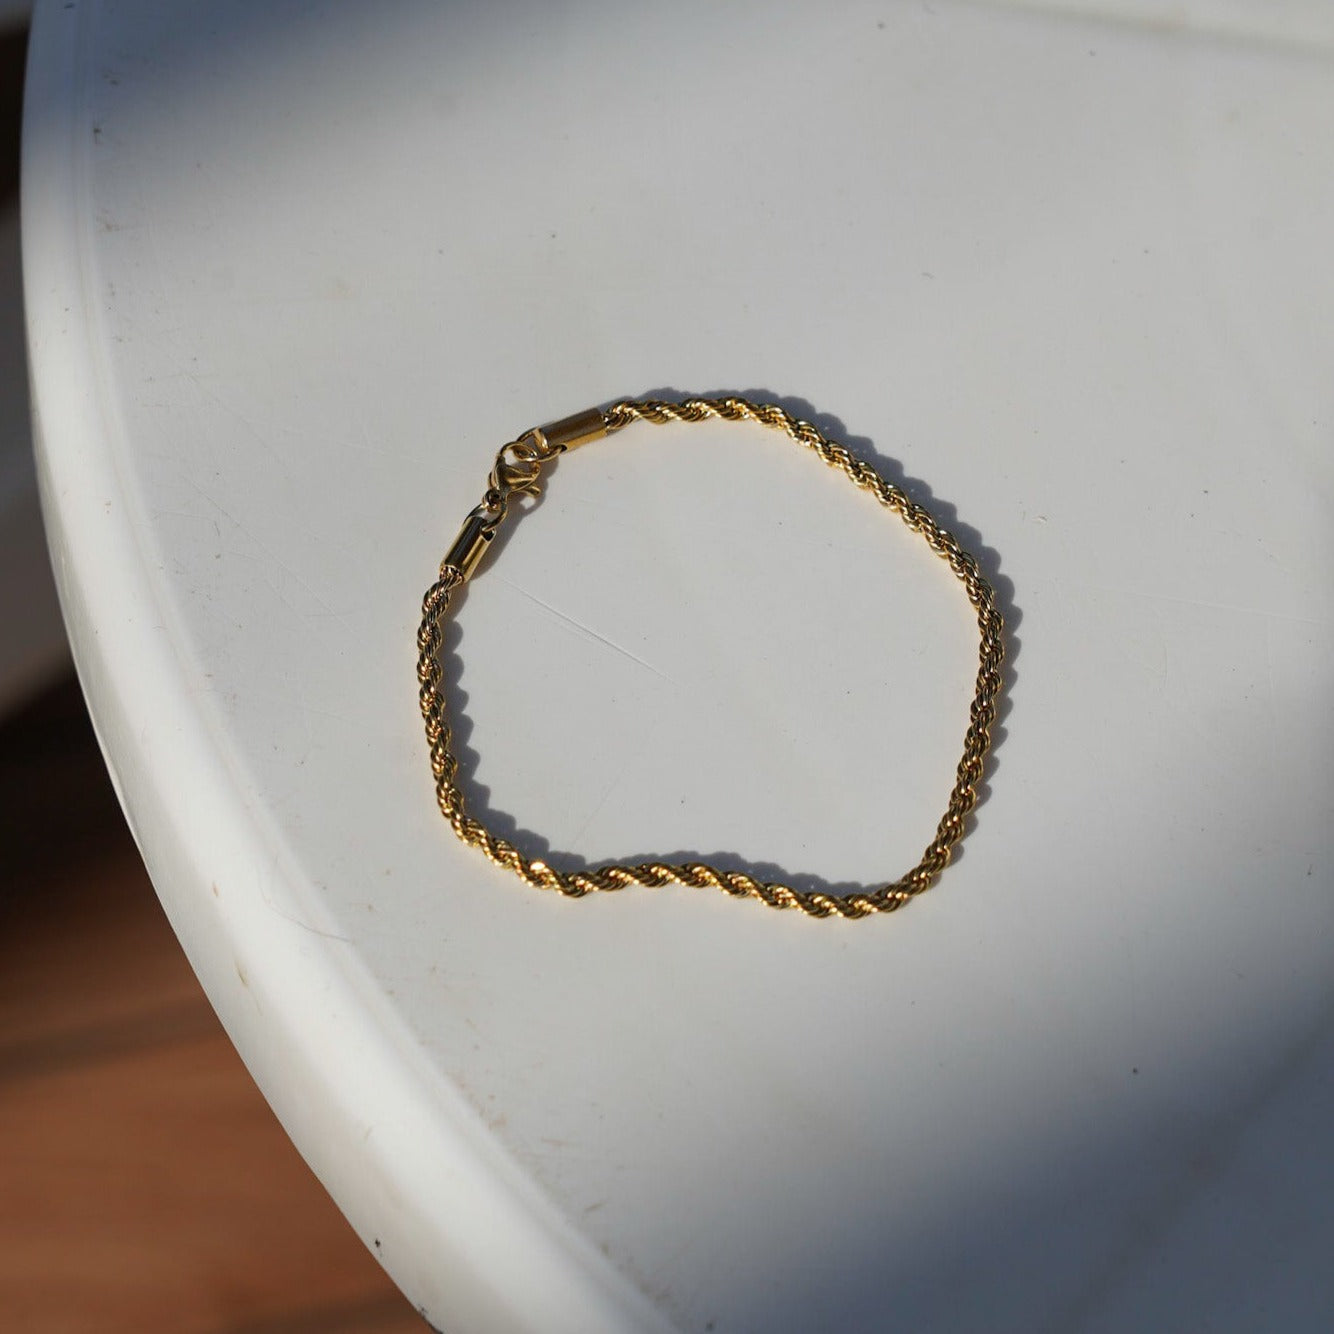 NL Rope bracelet - Gold-toned